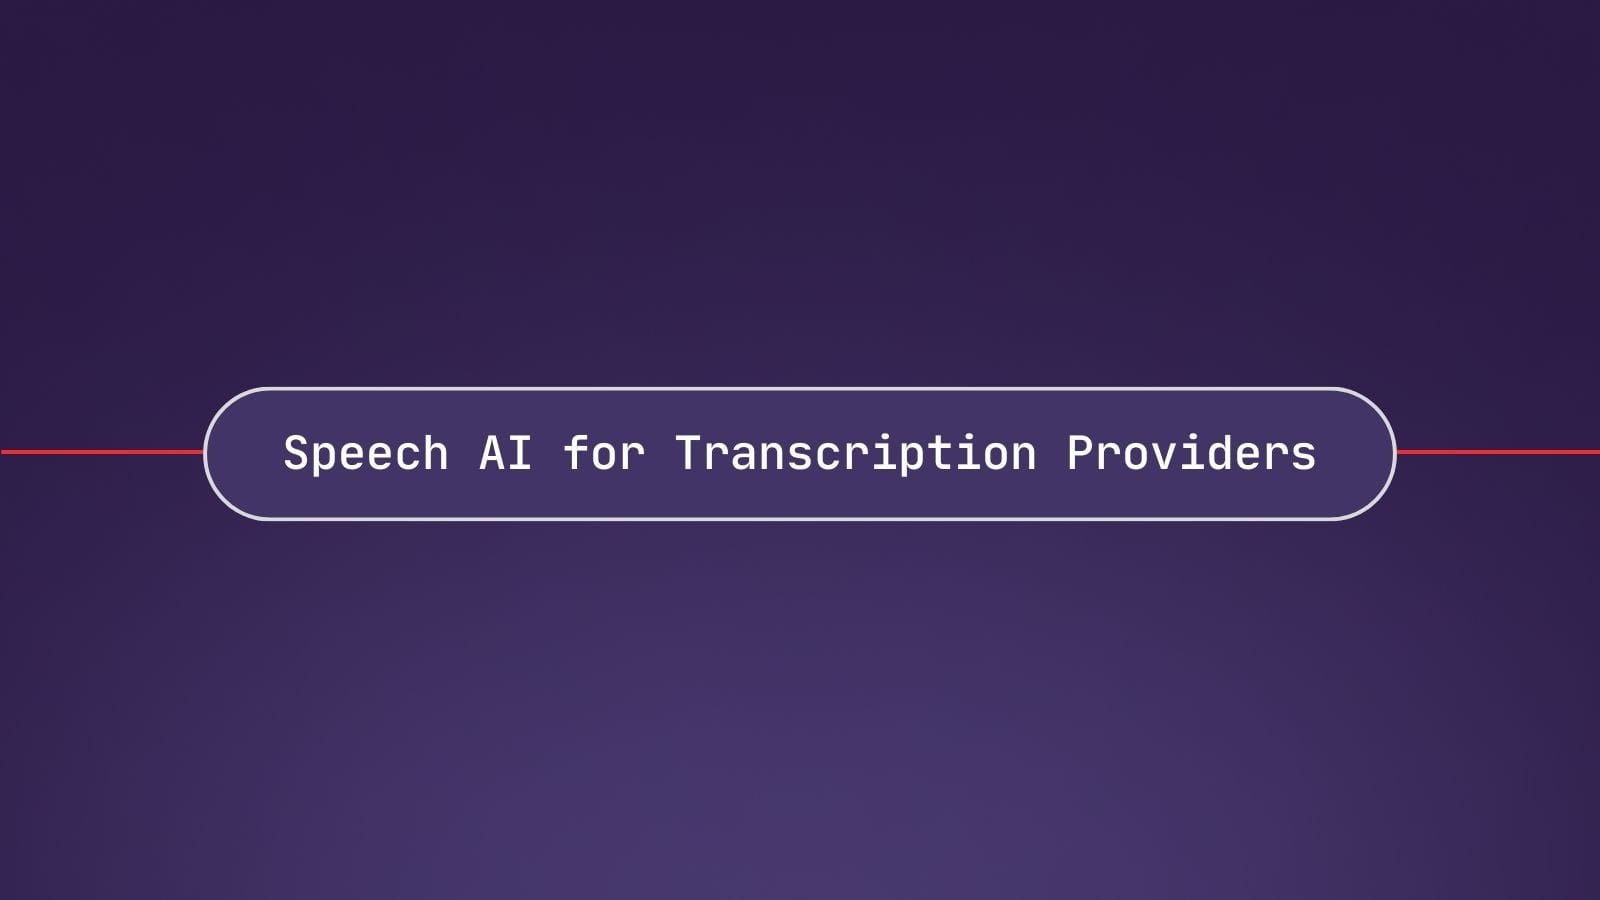 How Speech AI technology can improve transcription services